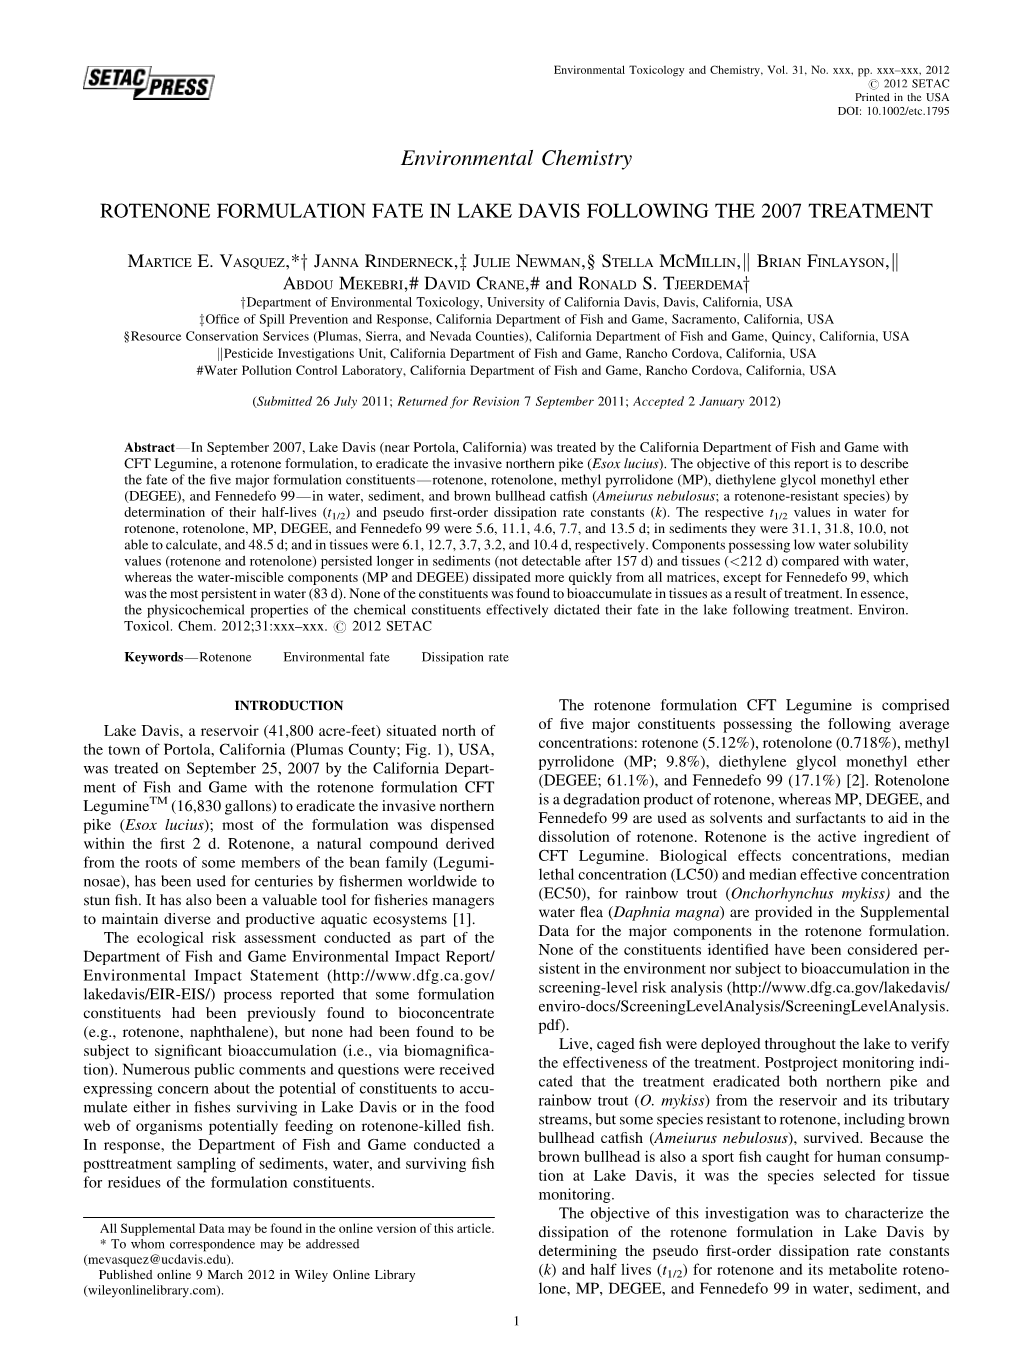 Rotenone Formulation Fate in Lake Davis Following the 2007 Treatment